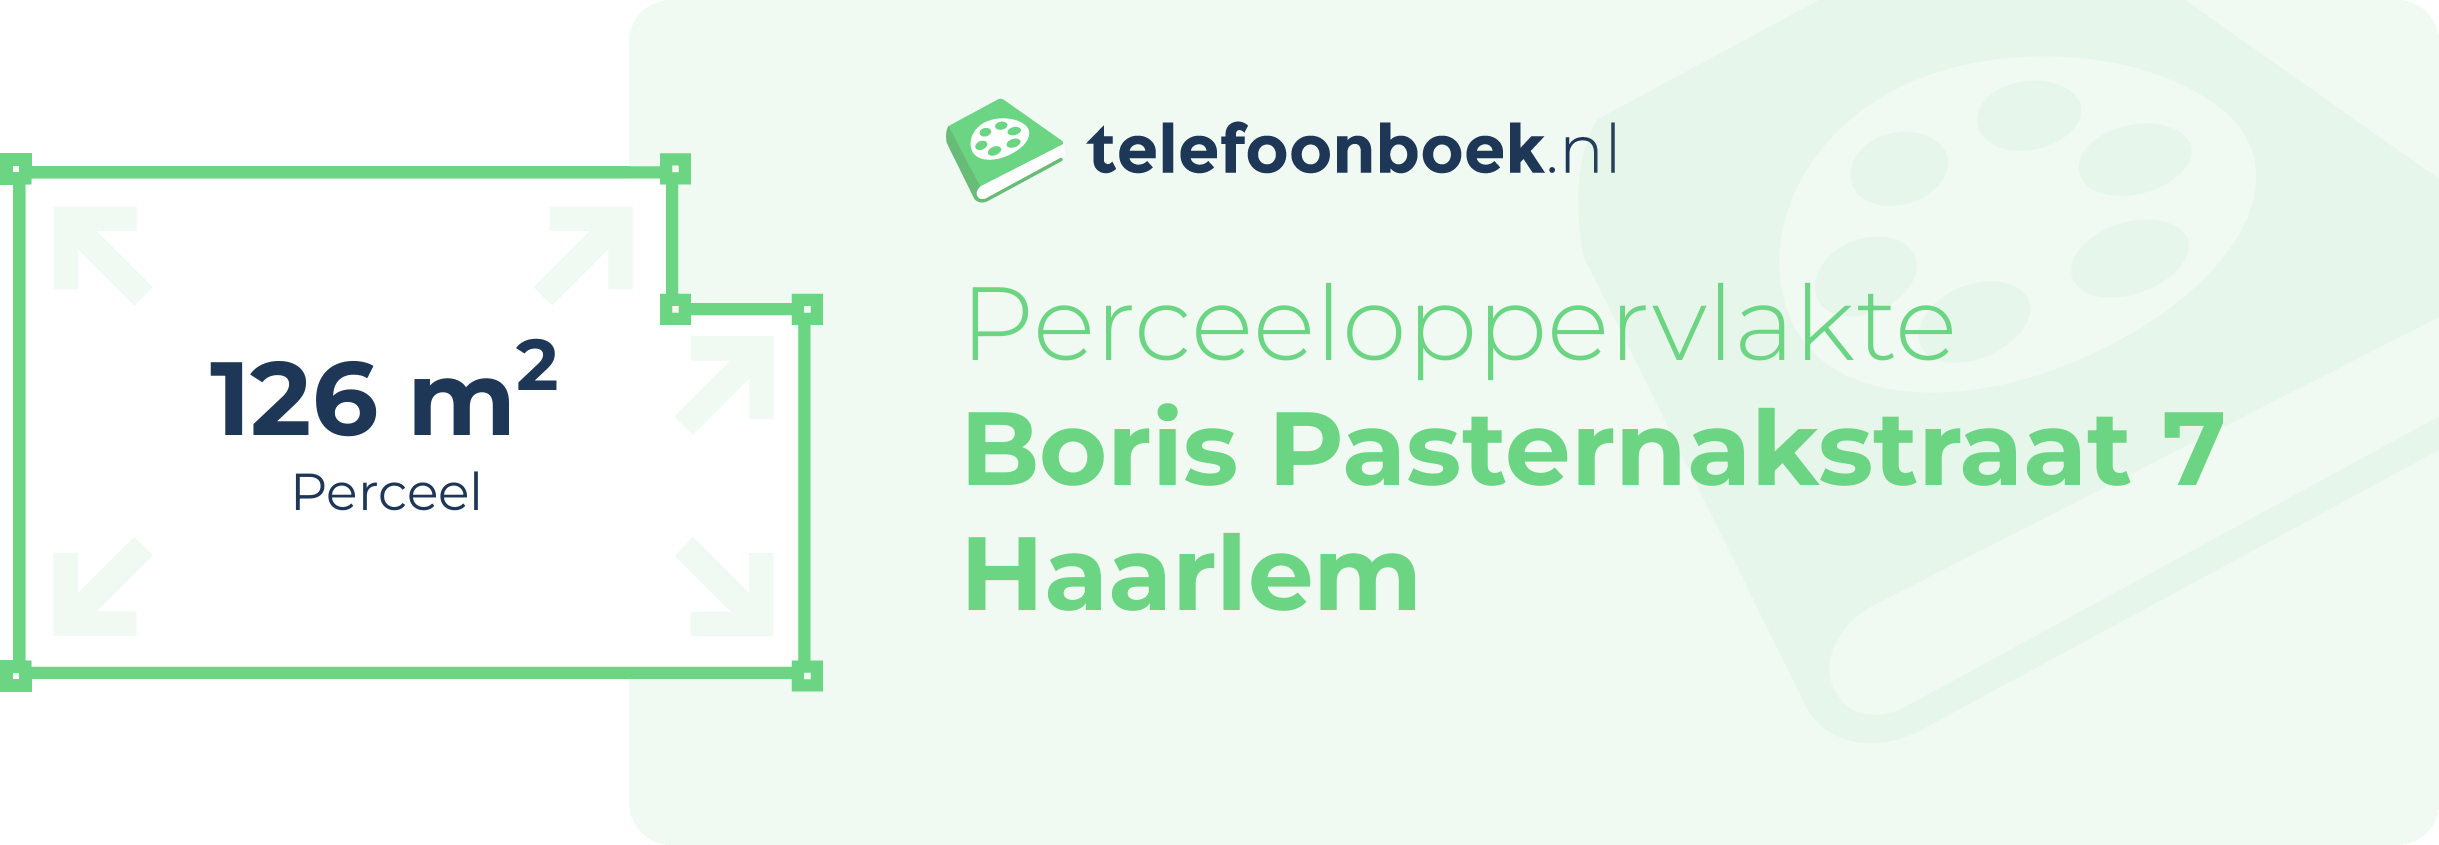 Perceeloppervlakte Boris Pasternakstraat 7 Haarlem